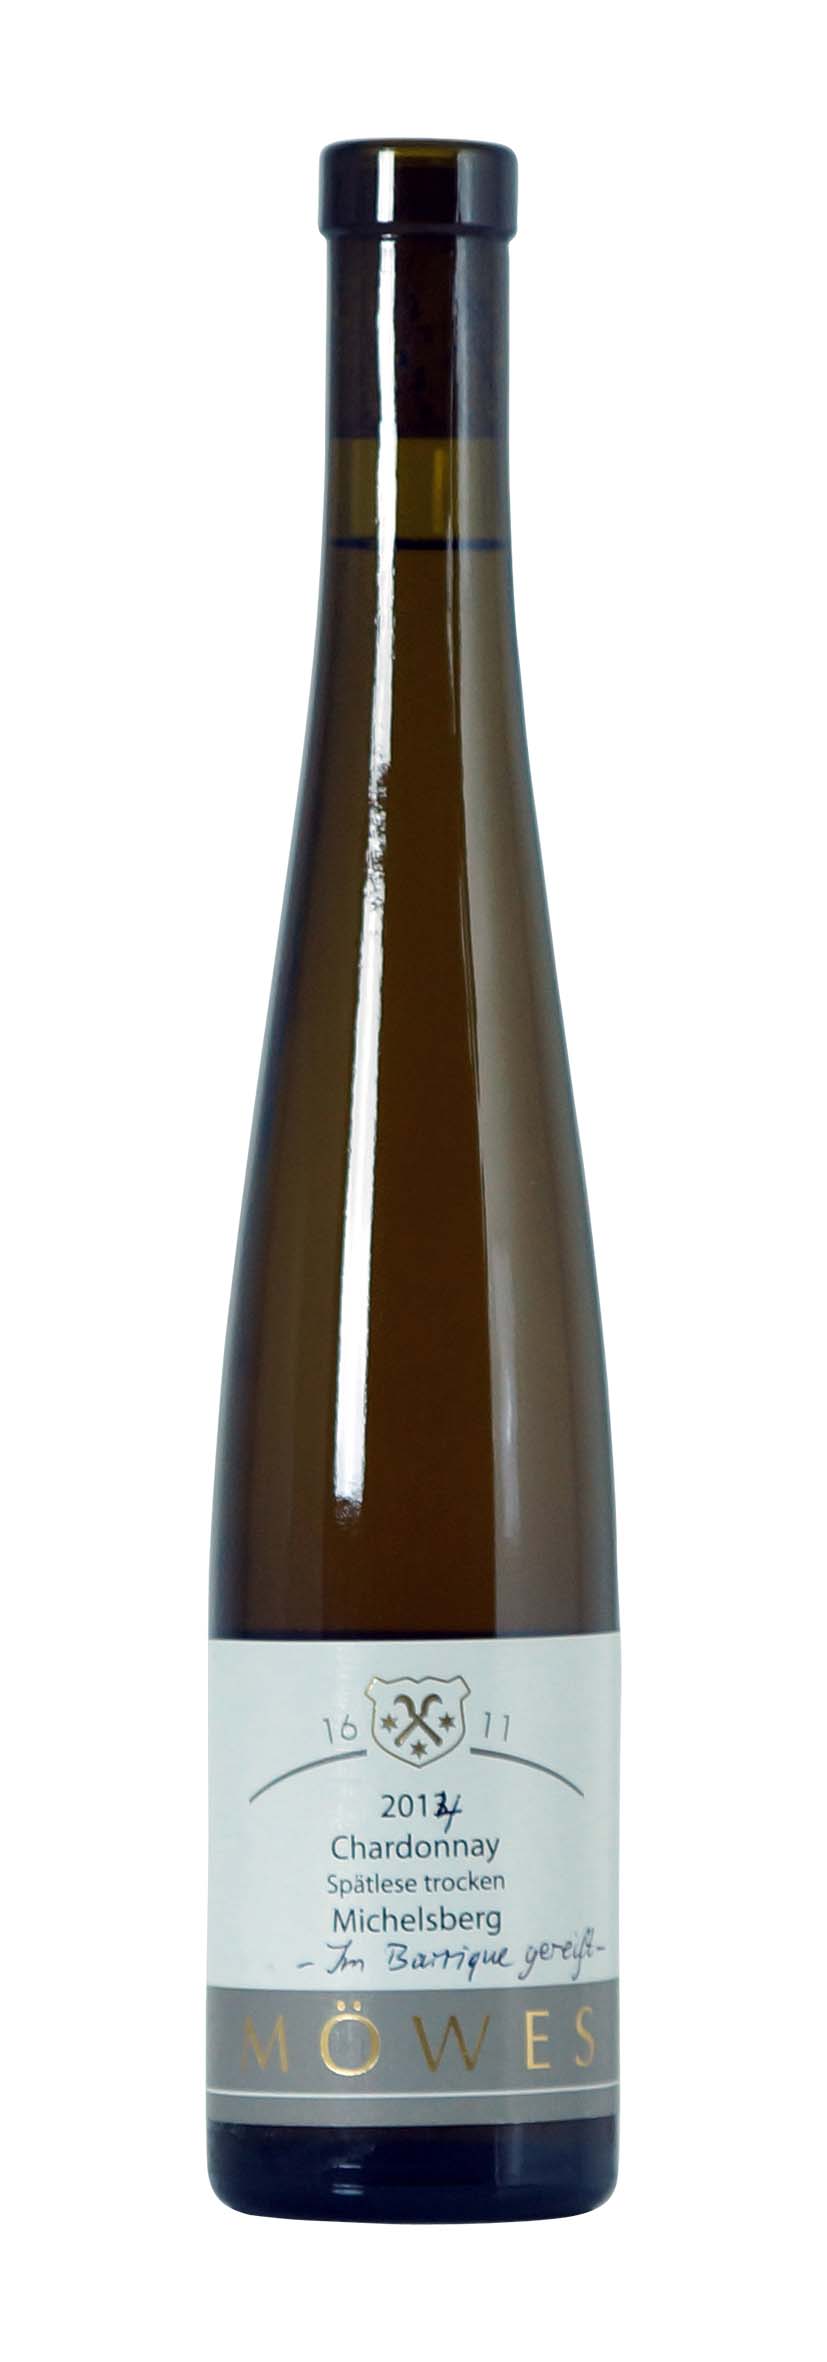 Michelsberg Chardonnay Spätlese trocken 2014